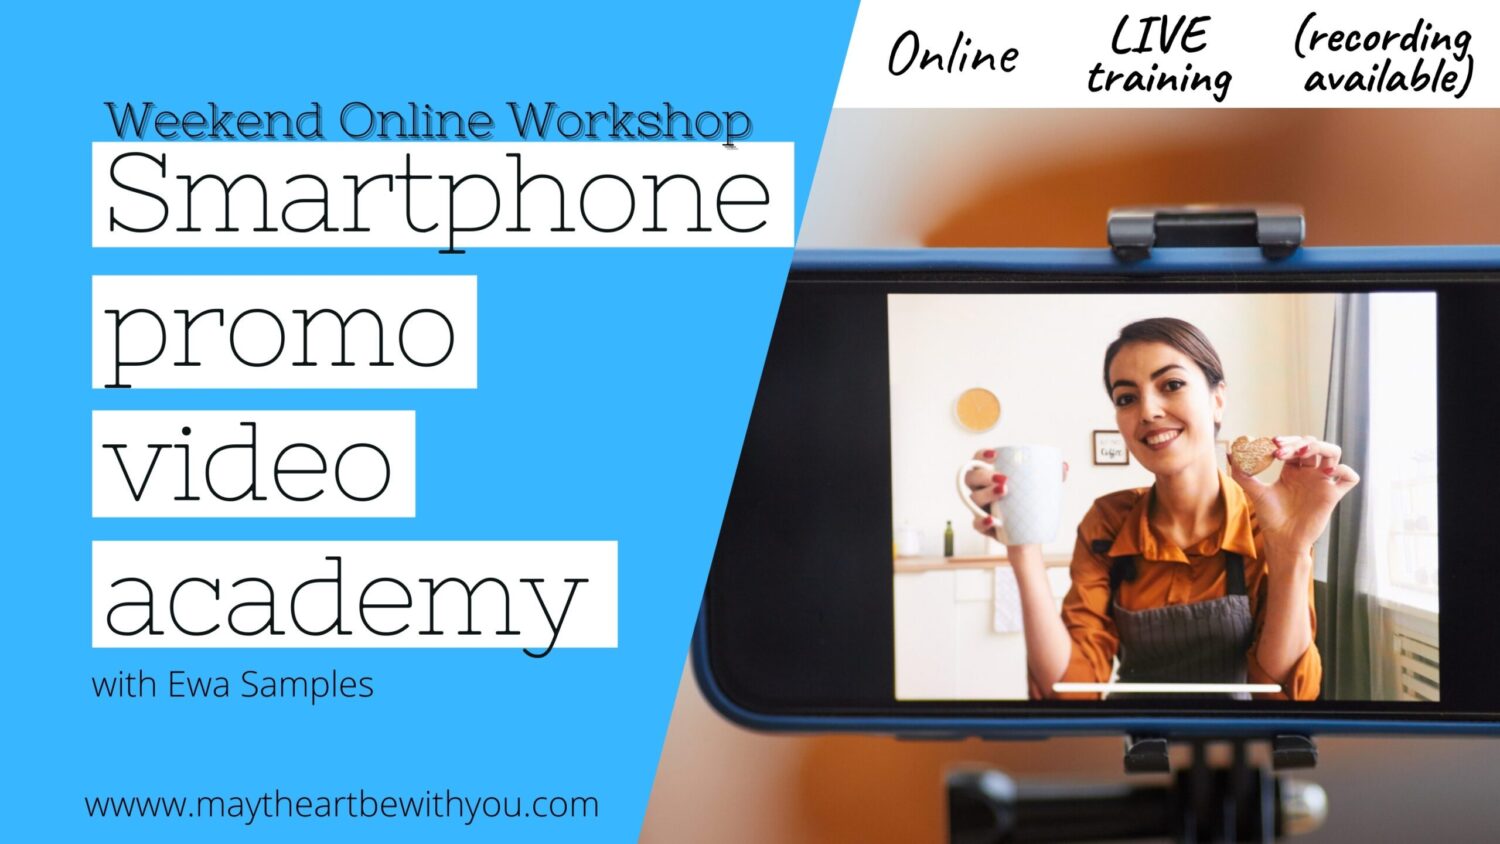 Online Workshop Promo Videos using smartphone